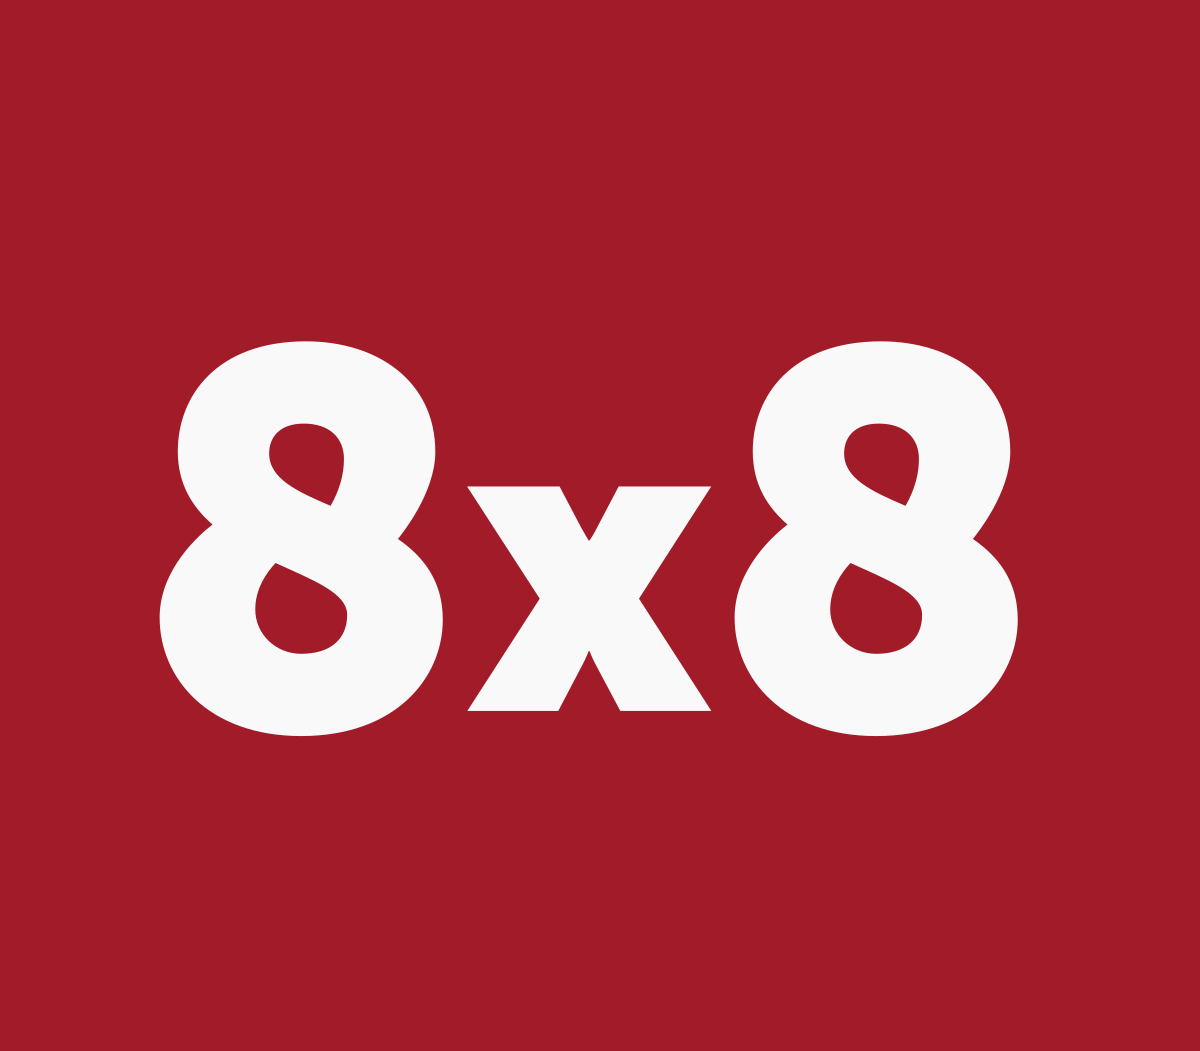 8x8_square_logo.svg